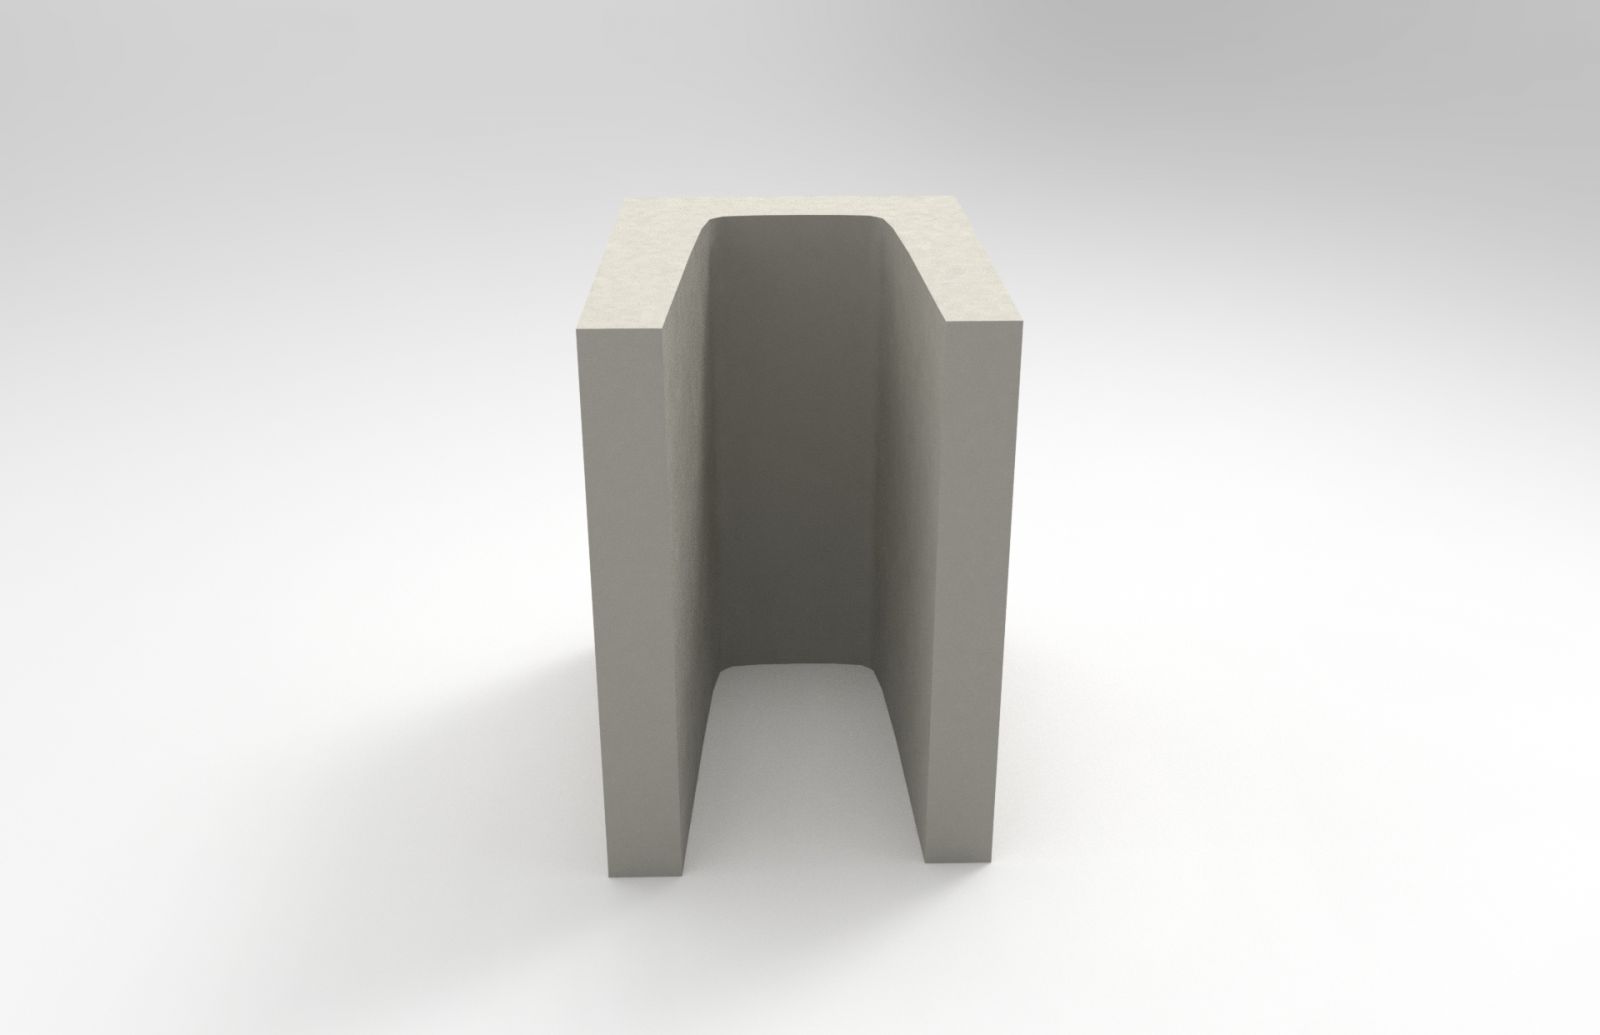 meia-canaleta-concreto-vedacao-aparente-14x19x19cm-classe-c-lateral